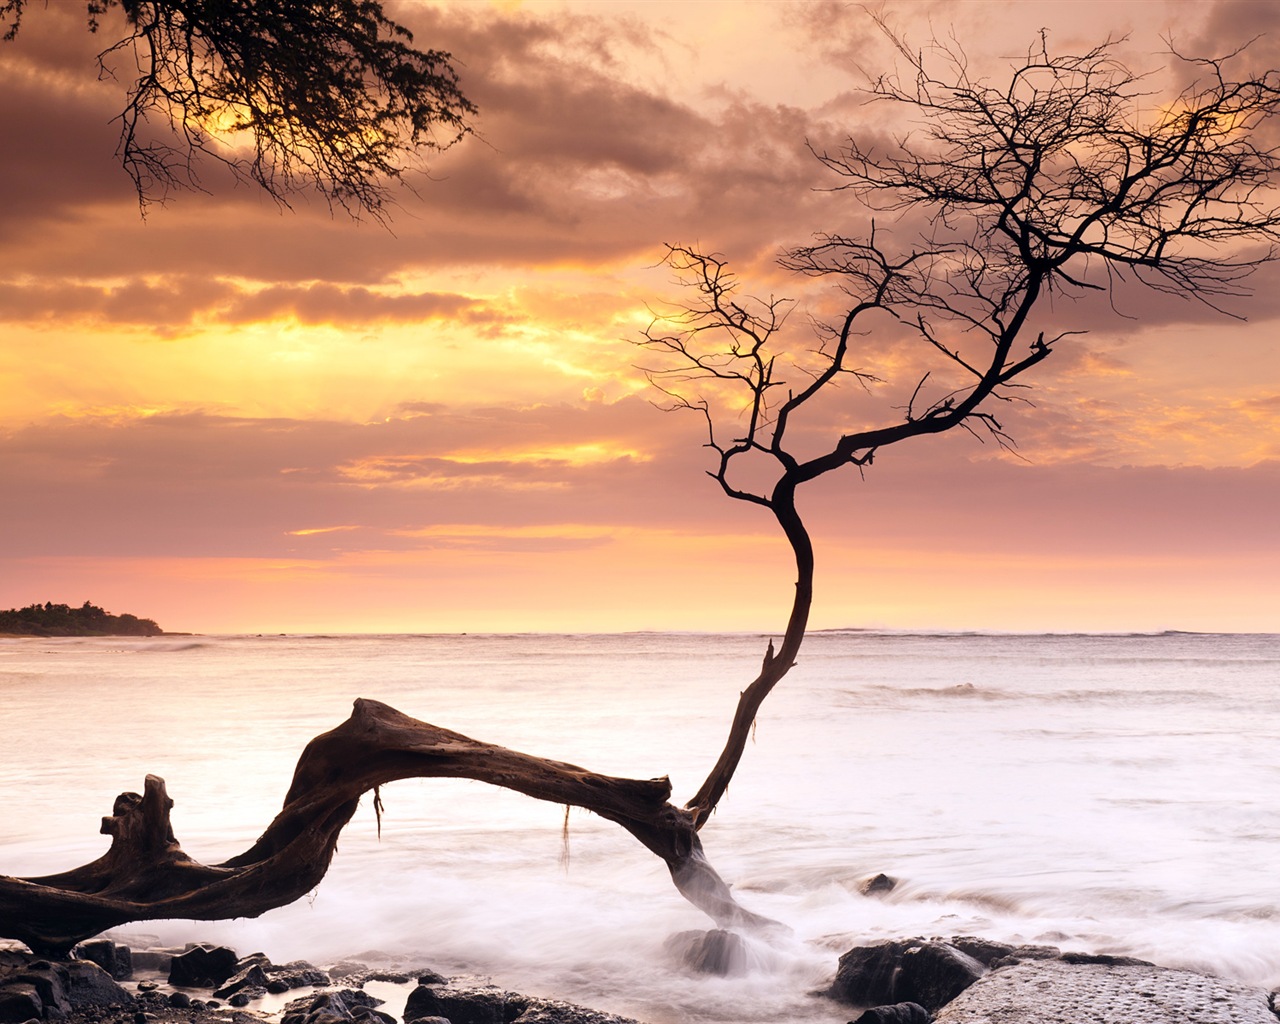 Windows 8 theme wallpaper: Beach sunrise and sunset views #5 - 1280x1024